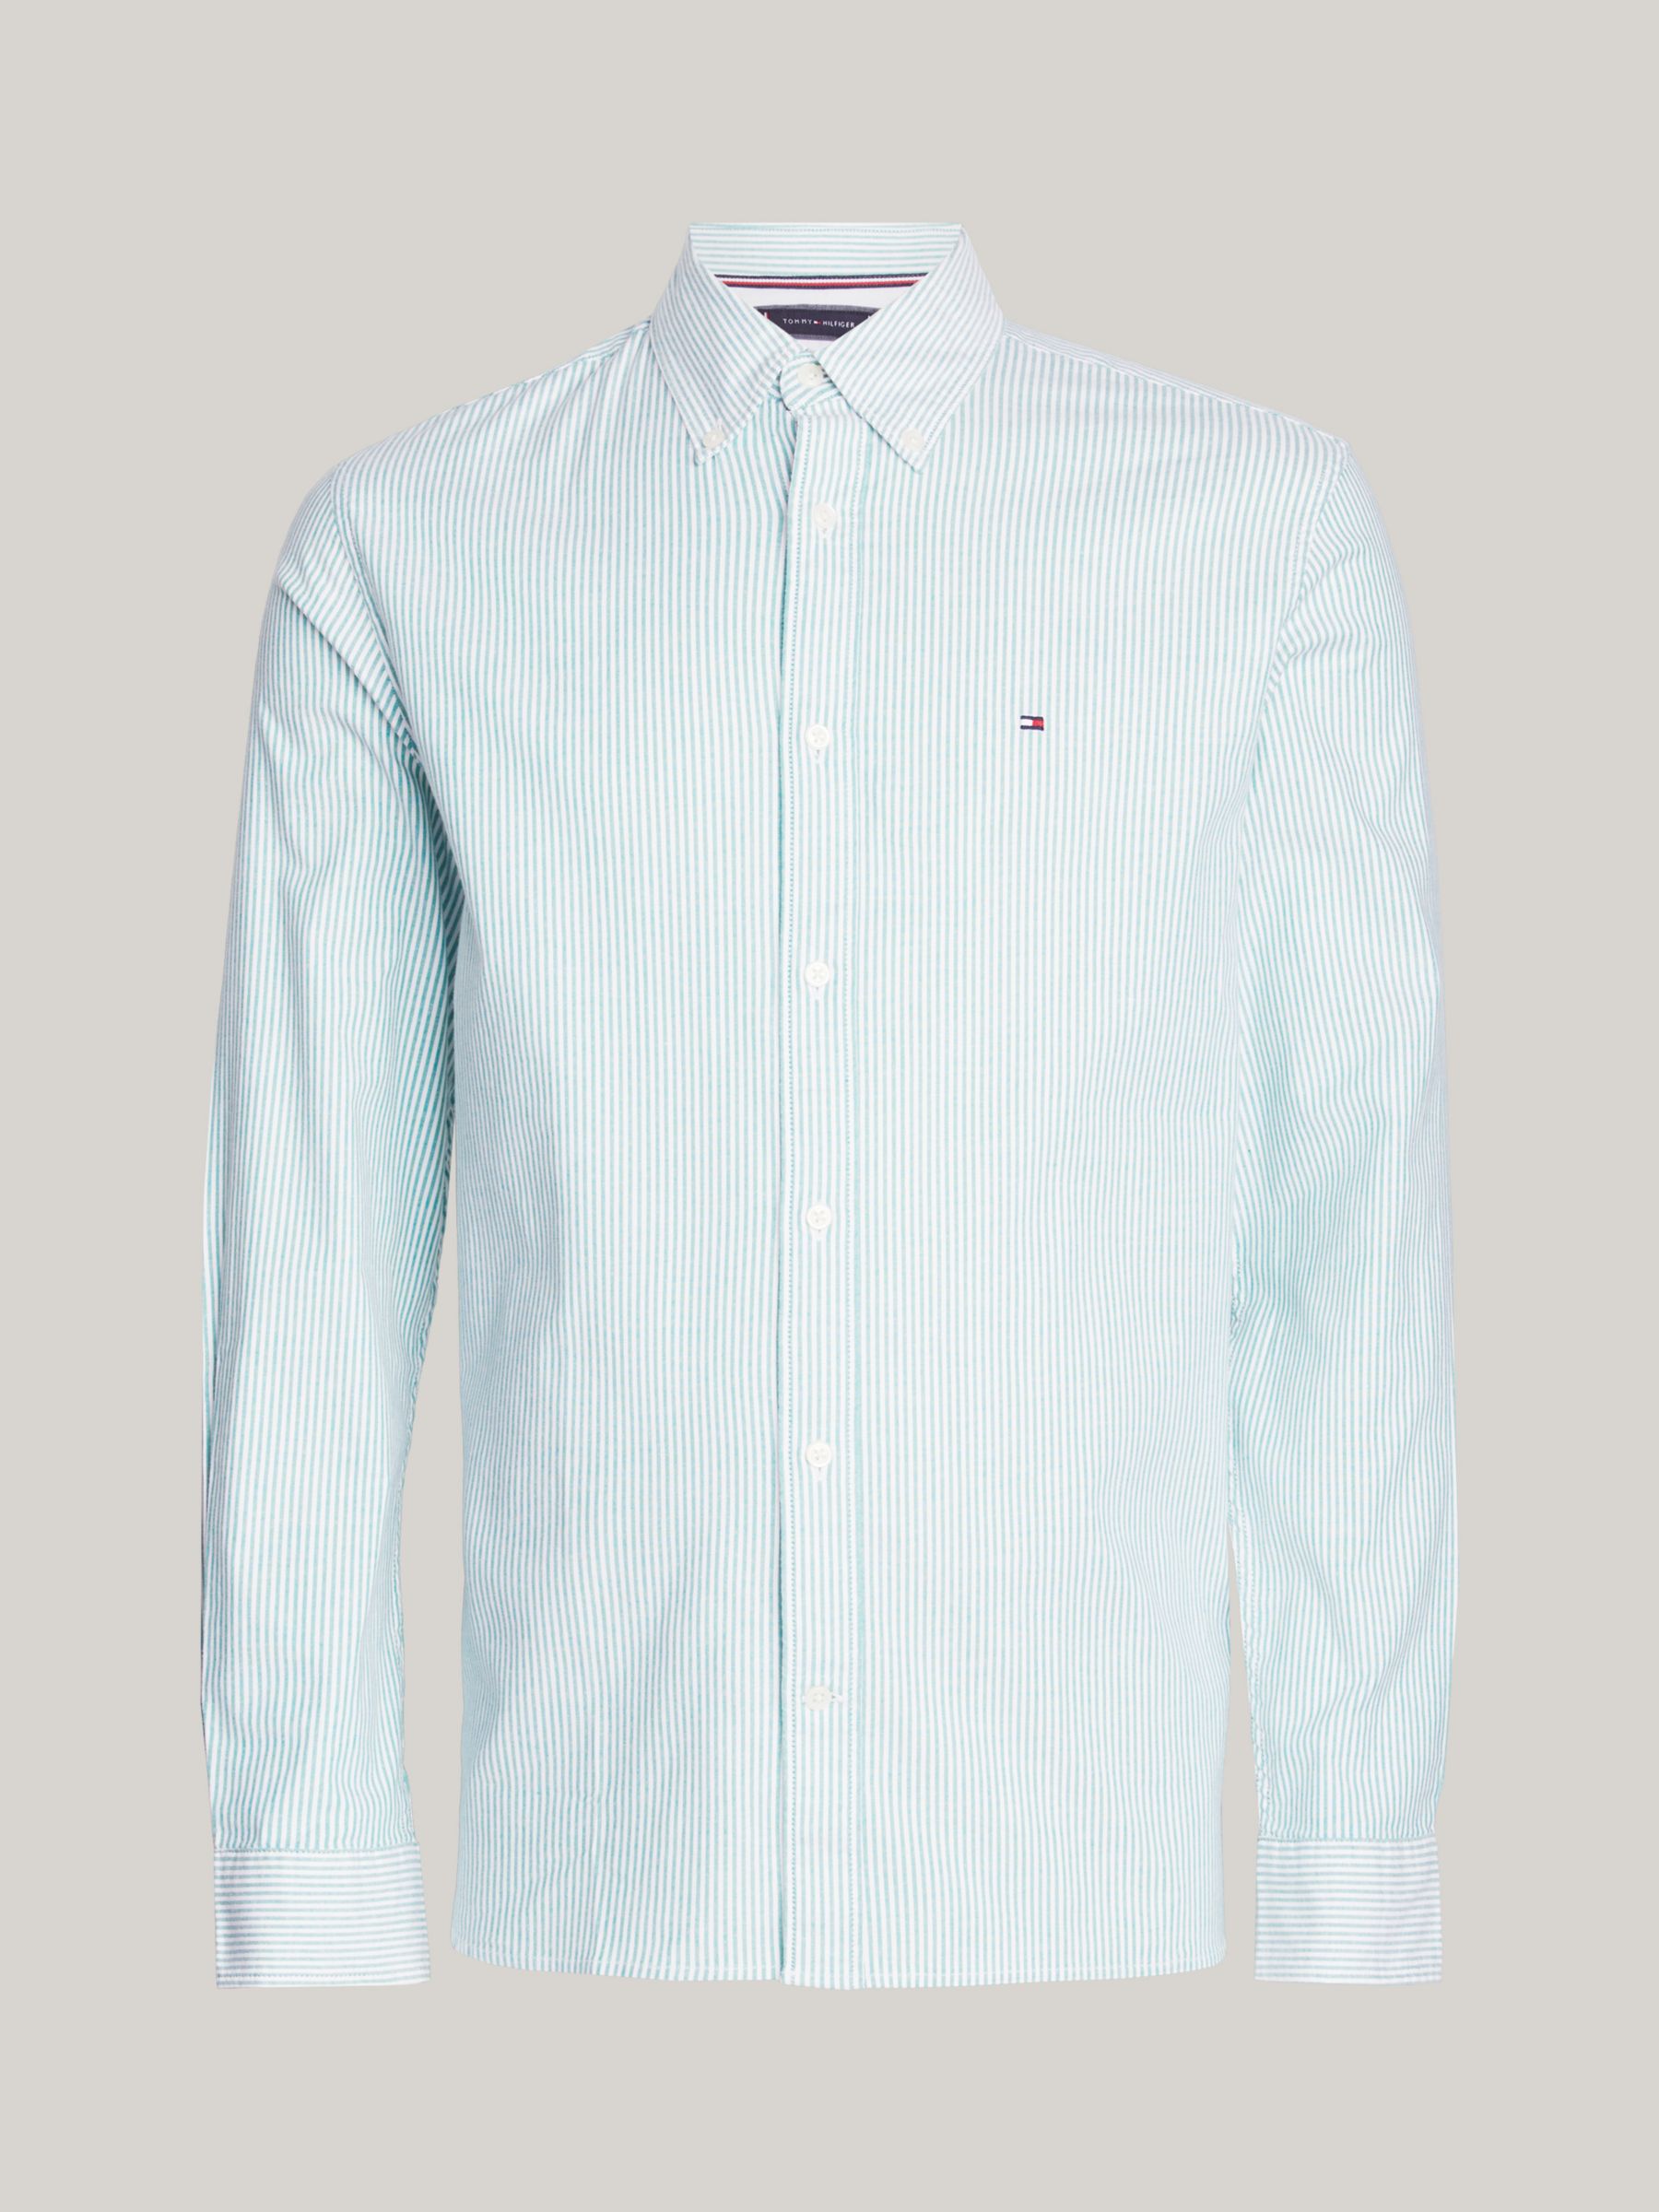 Tommy Hilfiger 1985 Flex Oxford Stripe Long Sleeve Shirt, Green/White, L